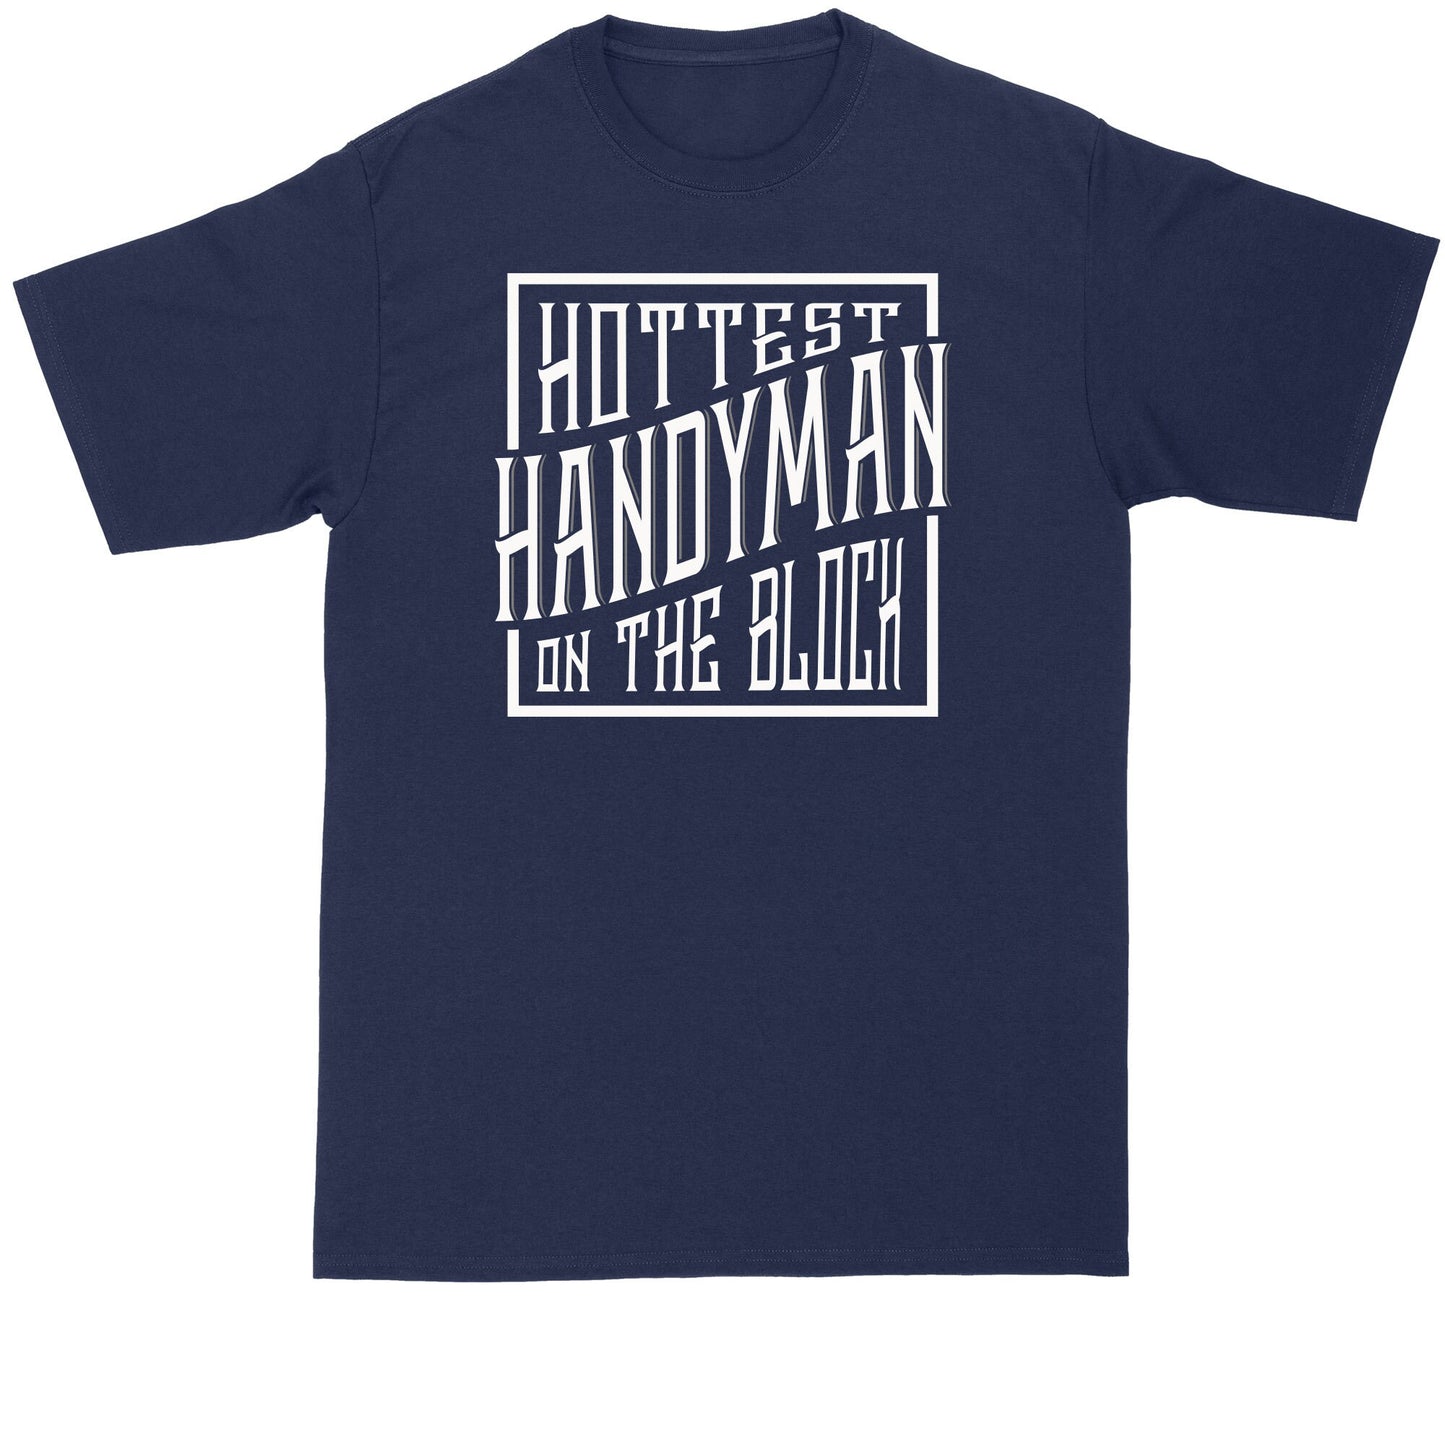 Handyman Shirt | Hottest Handyman on the Block | Mens Big and Tall T-Shirt